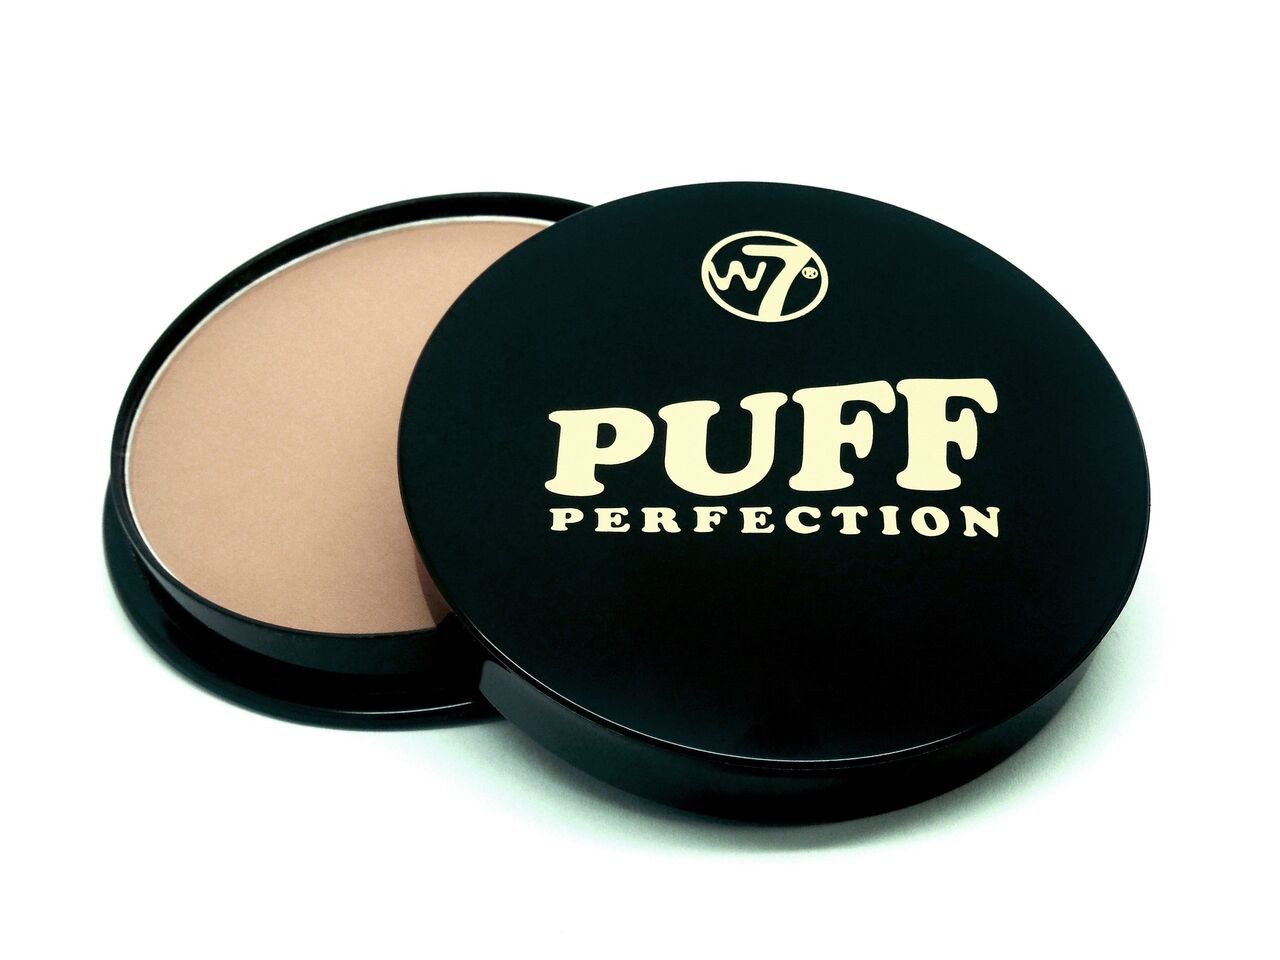 Buy W7 Puff Perfection Face Powder, Medium Beige | cosmeticsdiarypk 100% Original Beauty Products